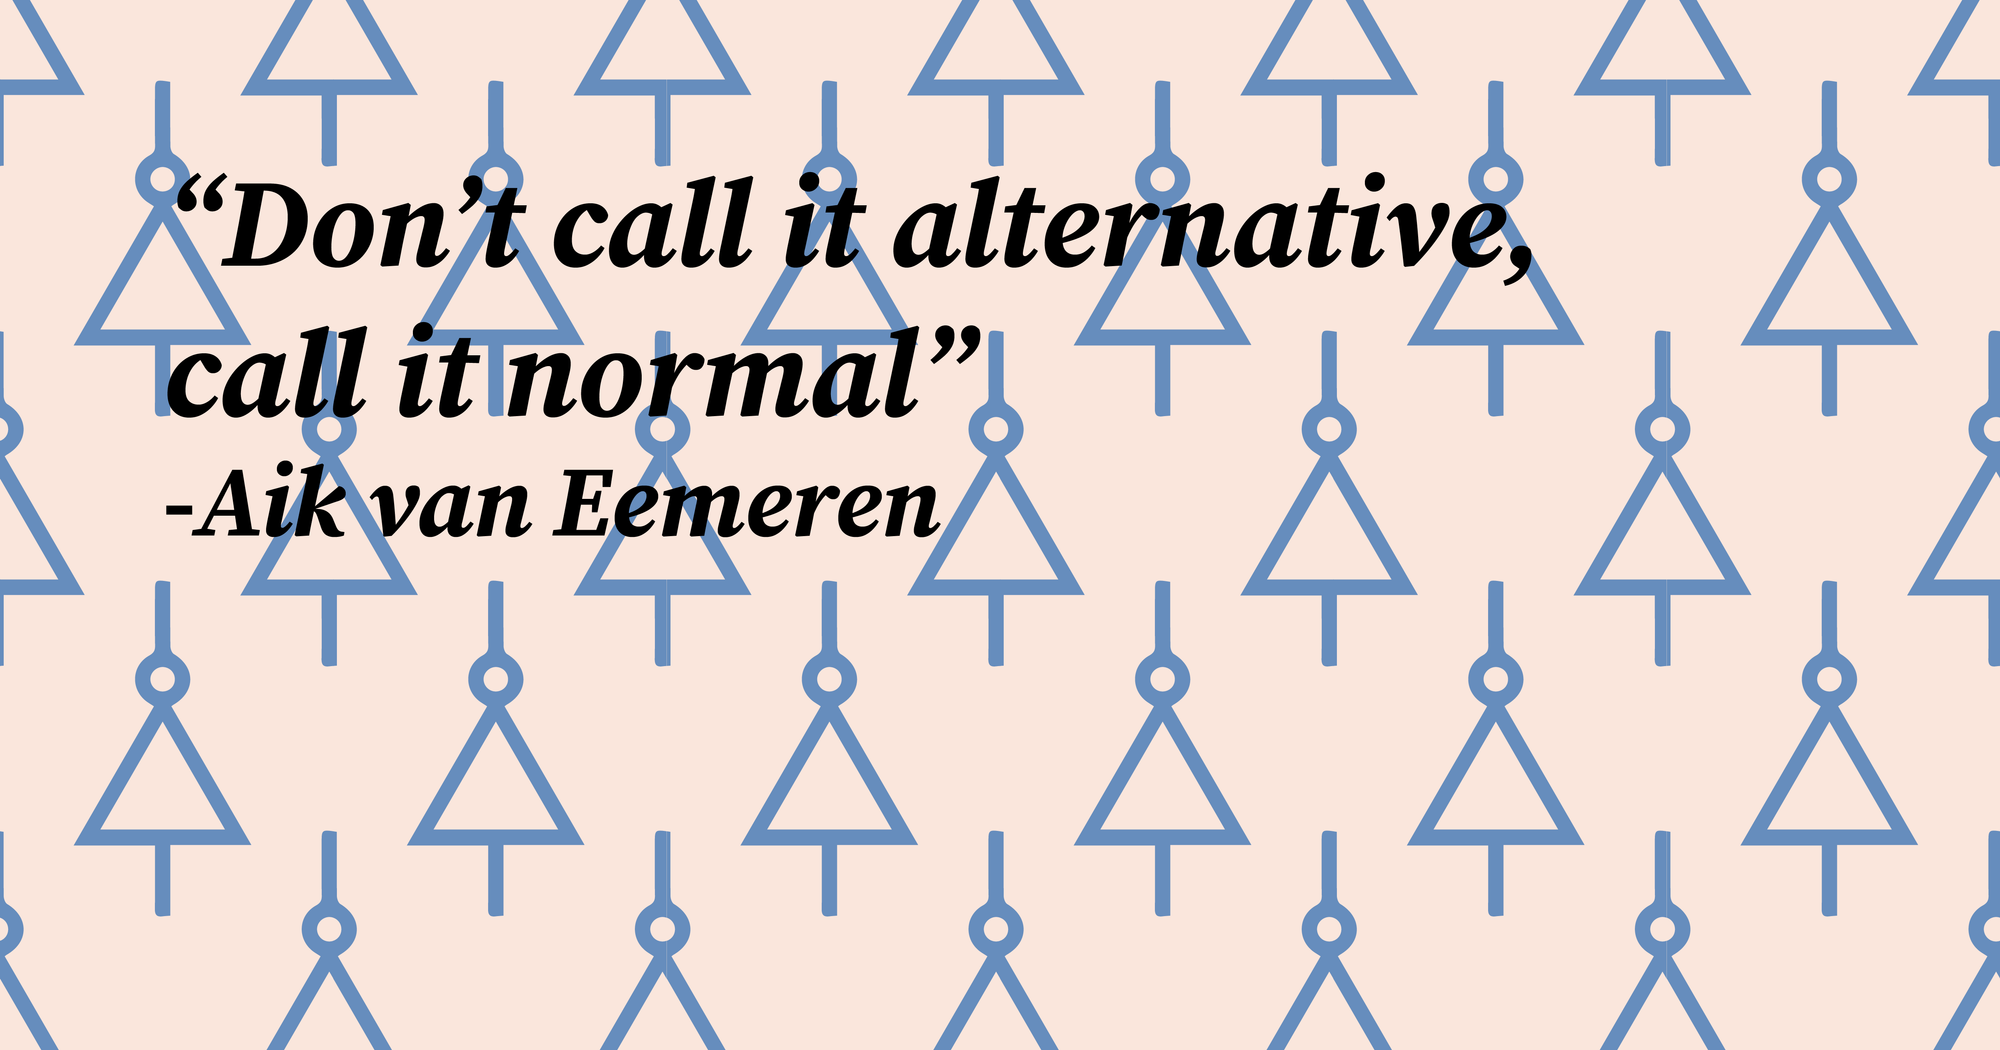 Aik van Eemeren: "Don’t Call It Alternative, Call It Normal"